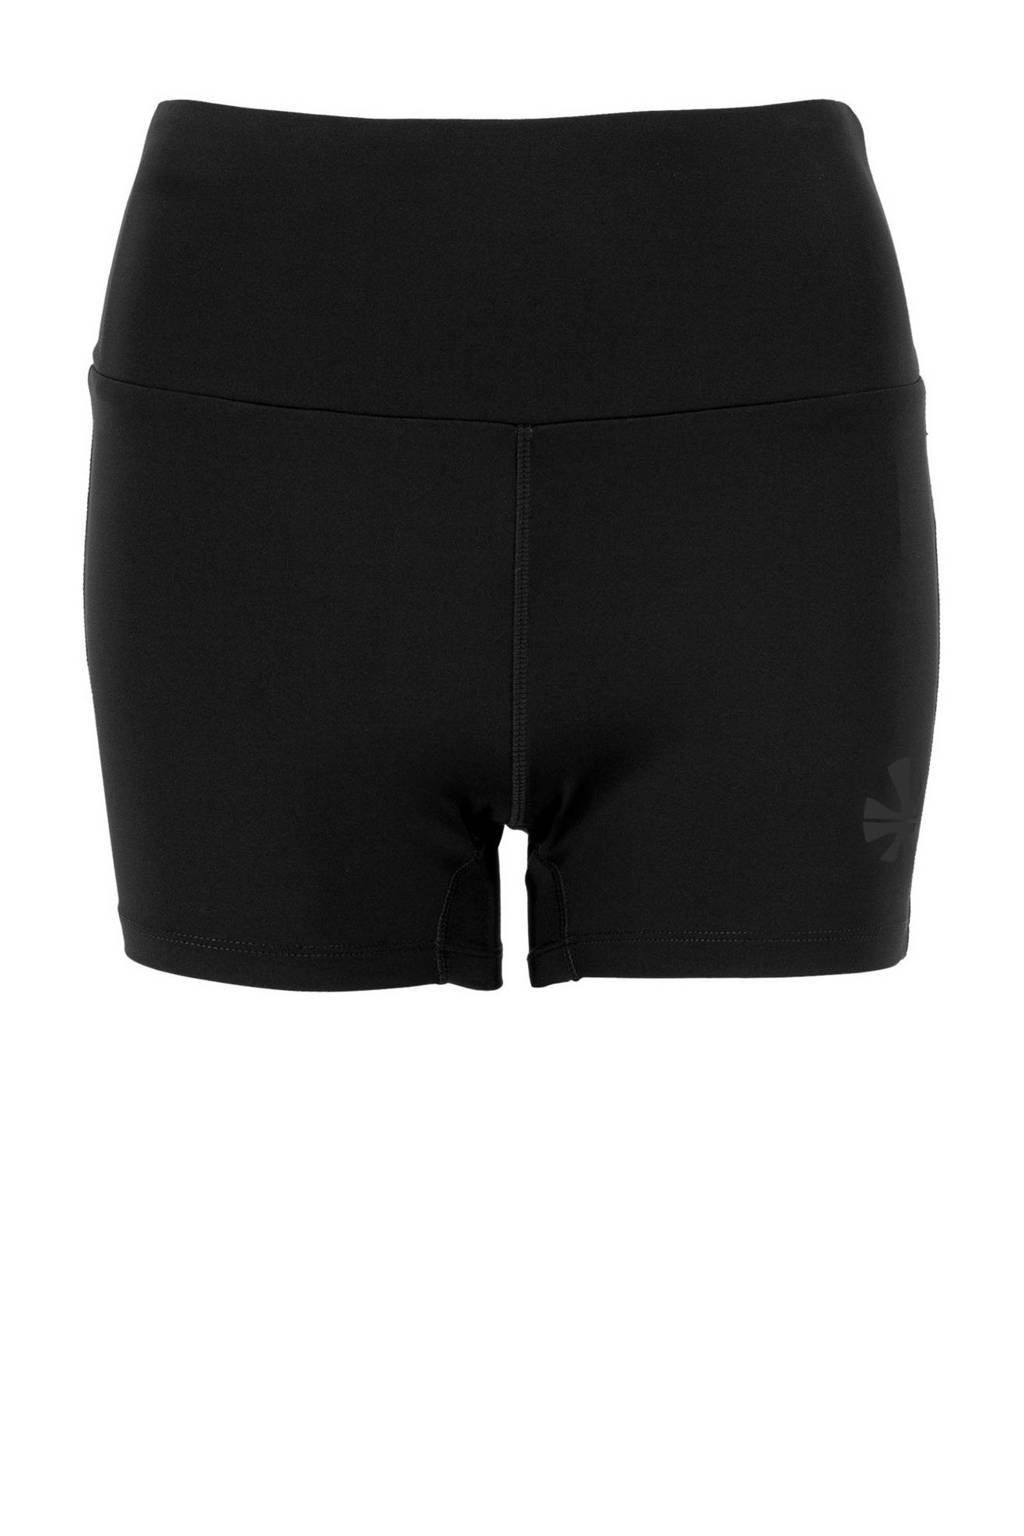 Zwarte dames Reece Australia sportshort van polyester met slim fit, high waist en elastische tailleband